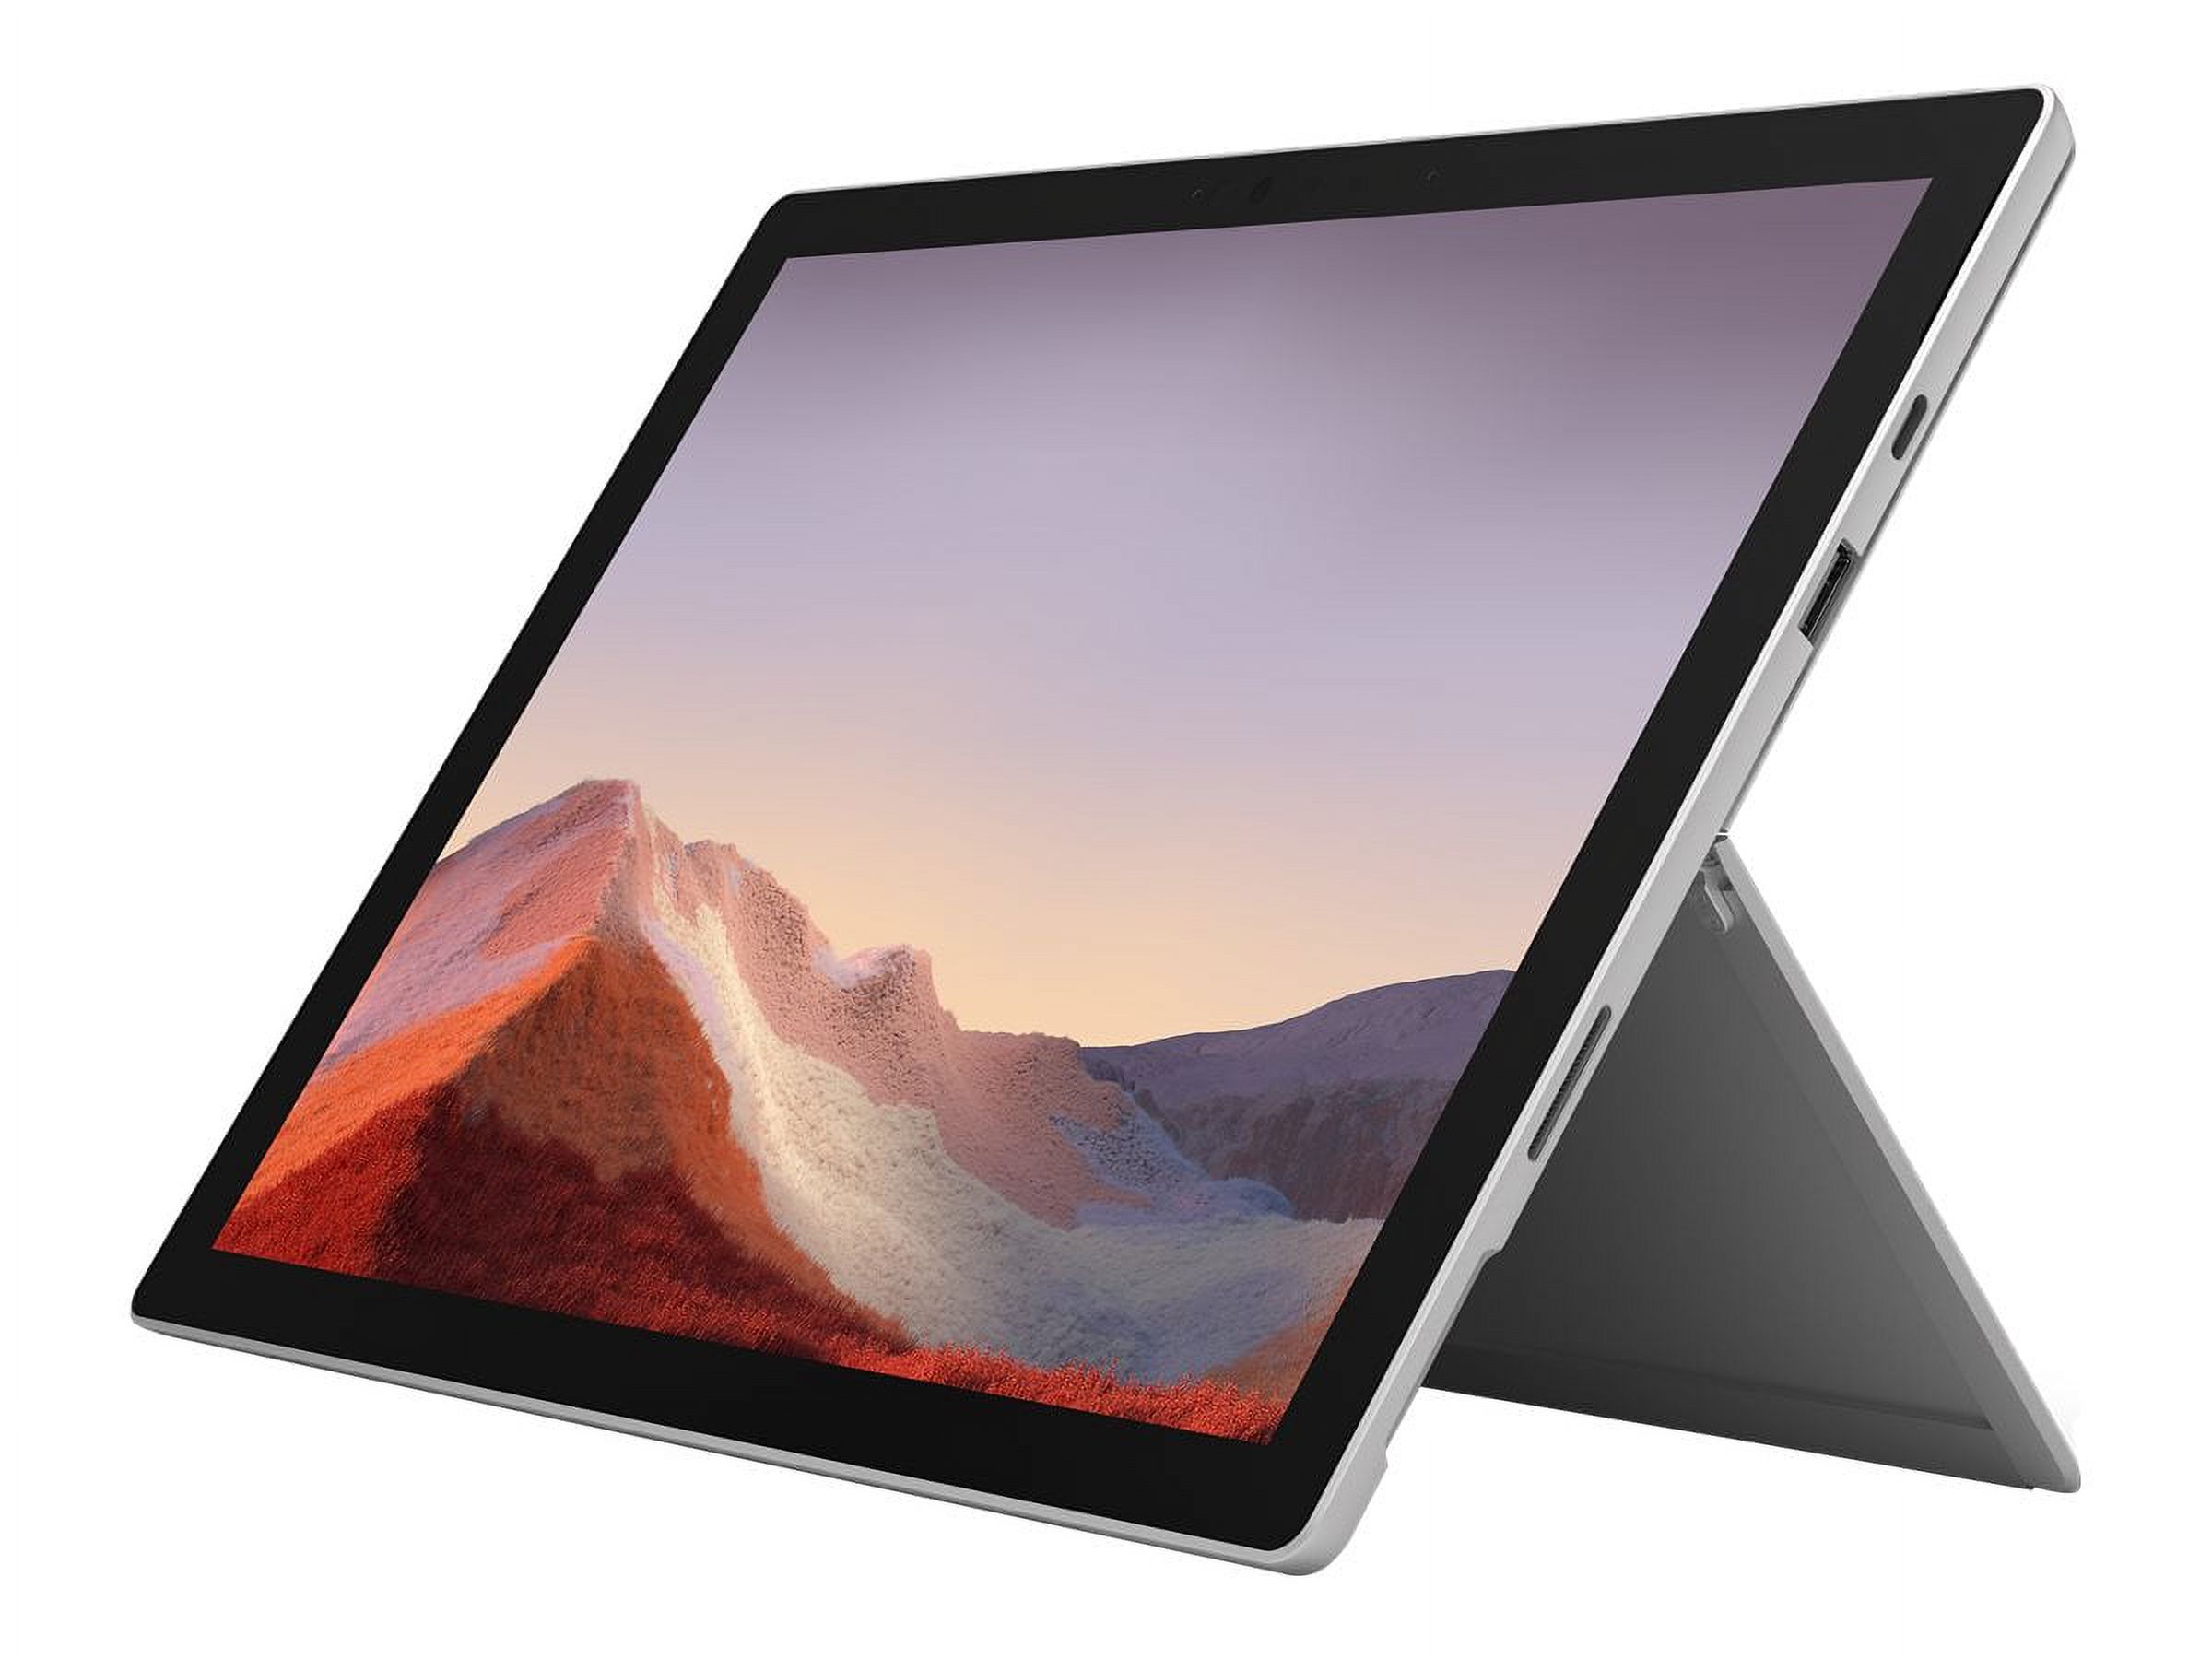 Restored Microsoft Surface Pro-7 Retail 12.3" Touchscreen Tablet, Intel I5-1035G4, 8GB RAM, 256GB SSD, Win10 Home 64, Black, PVZ-00003 (Refurbished) - image 1 of 4